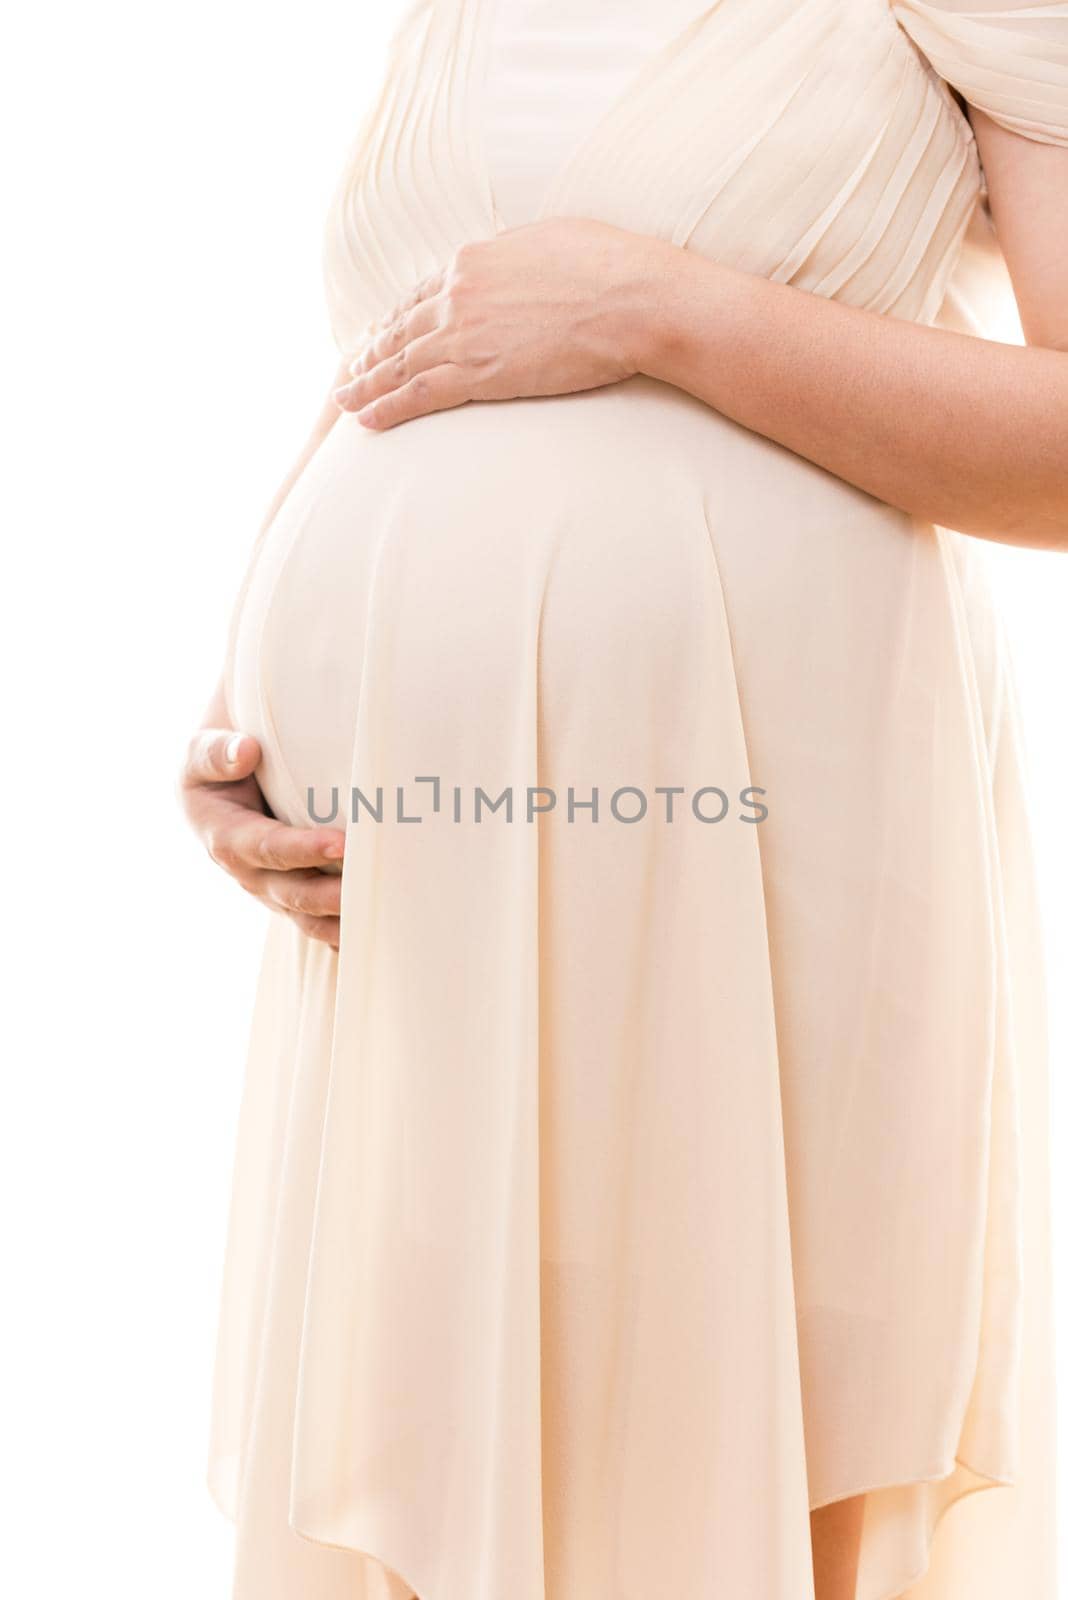 pregnant woman concept by norgal